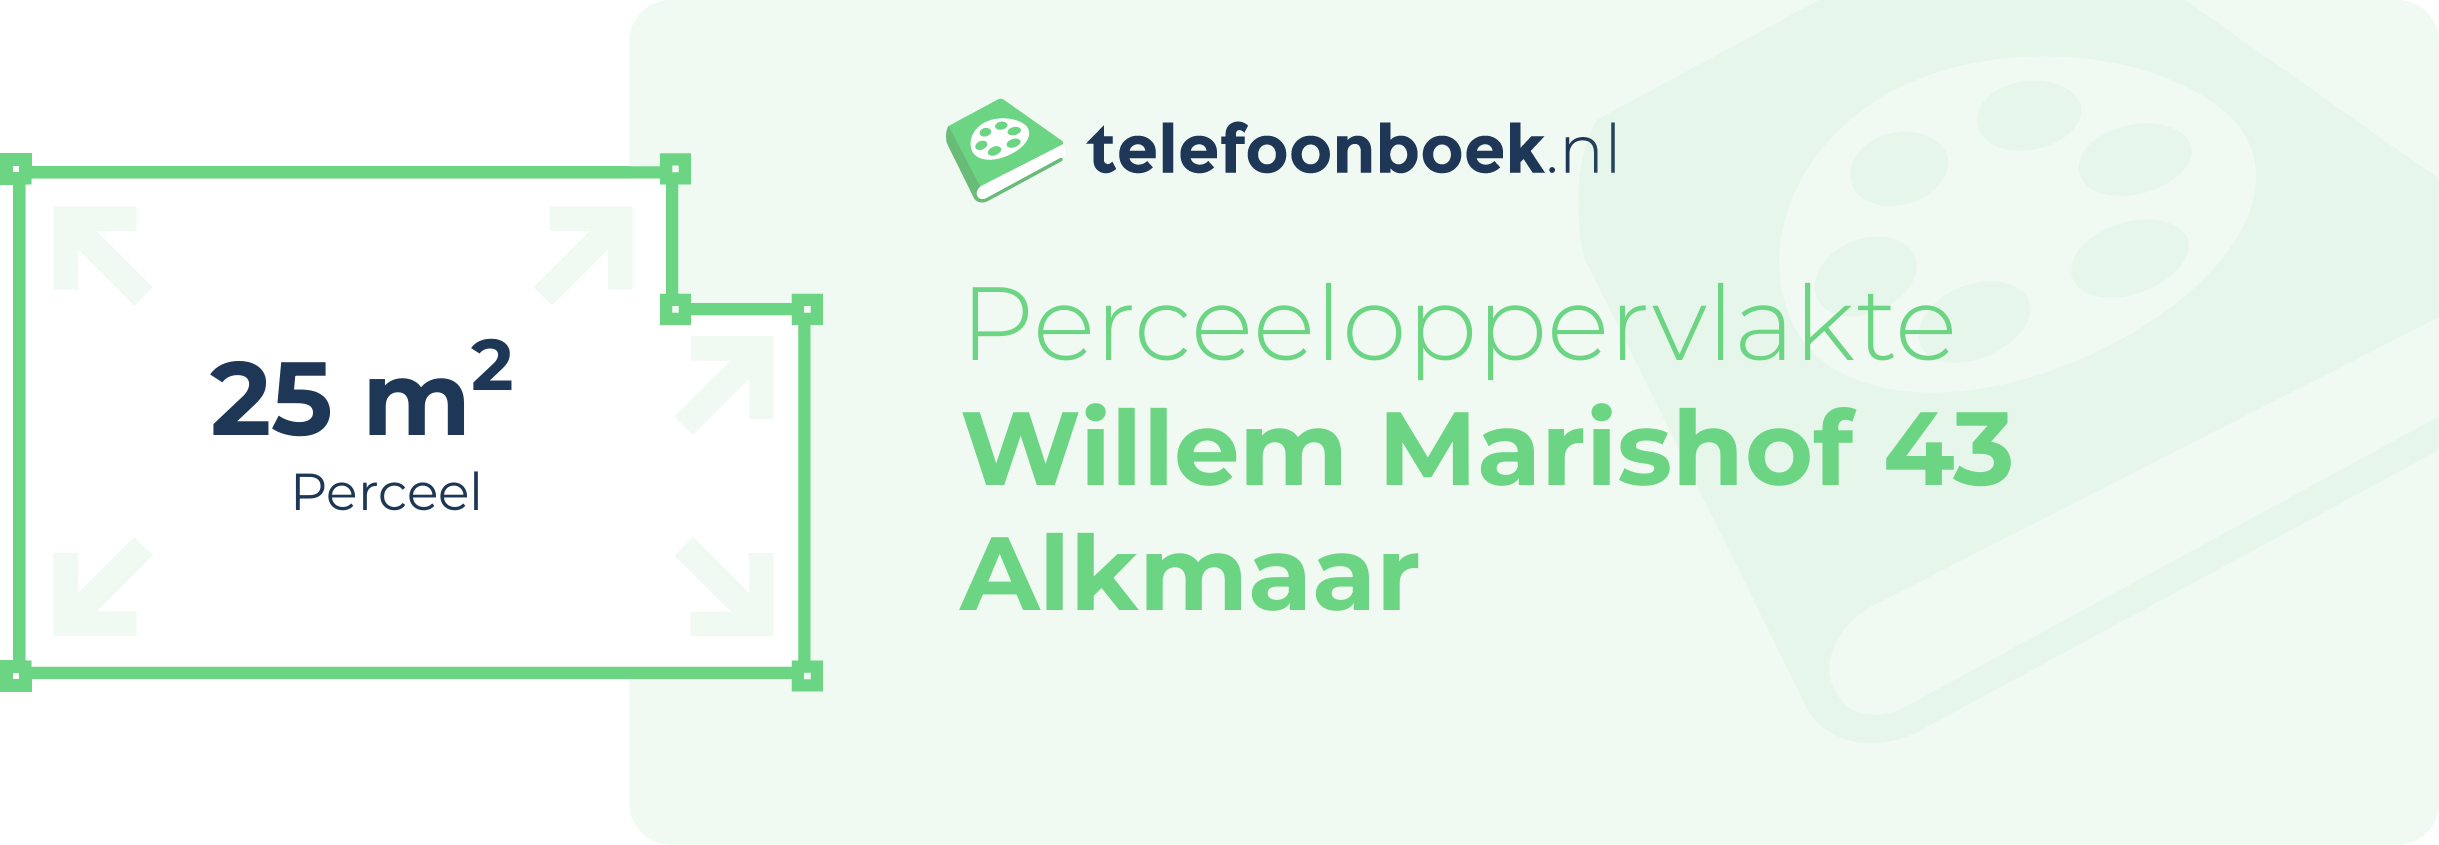 Perceeloppervlakte Willem Marishof 43 Alkmaar